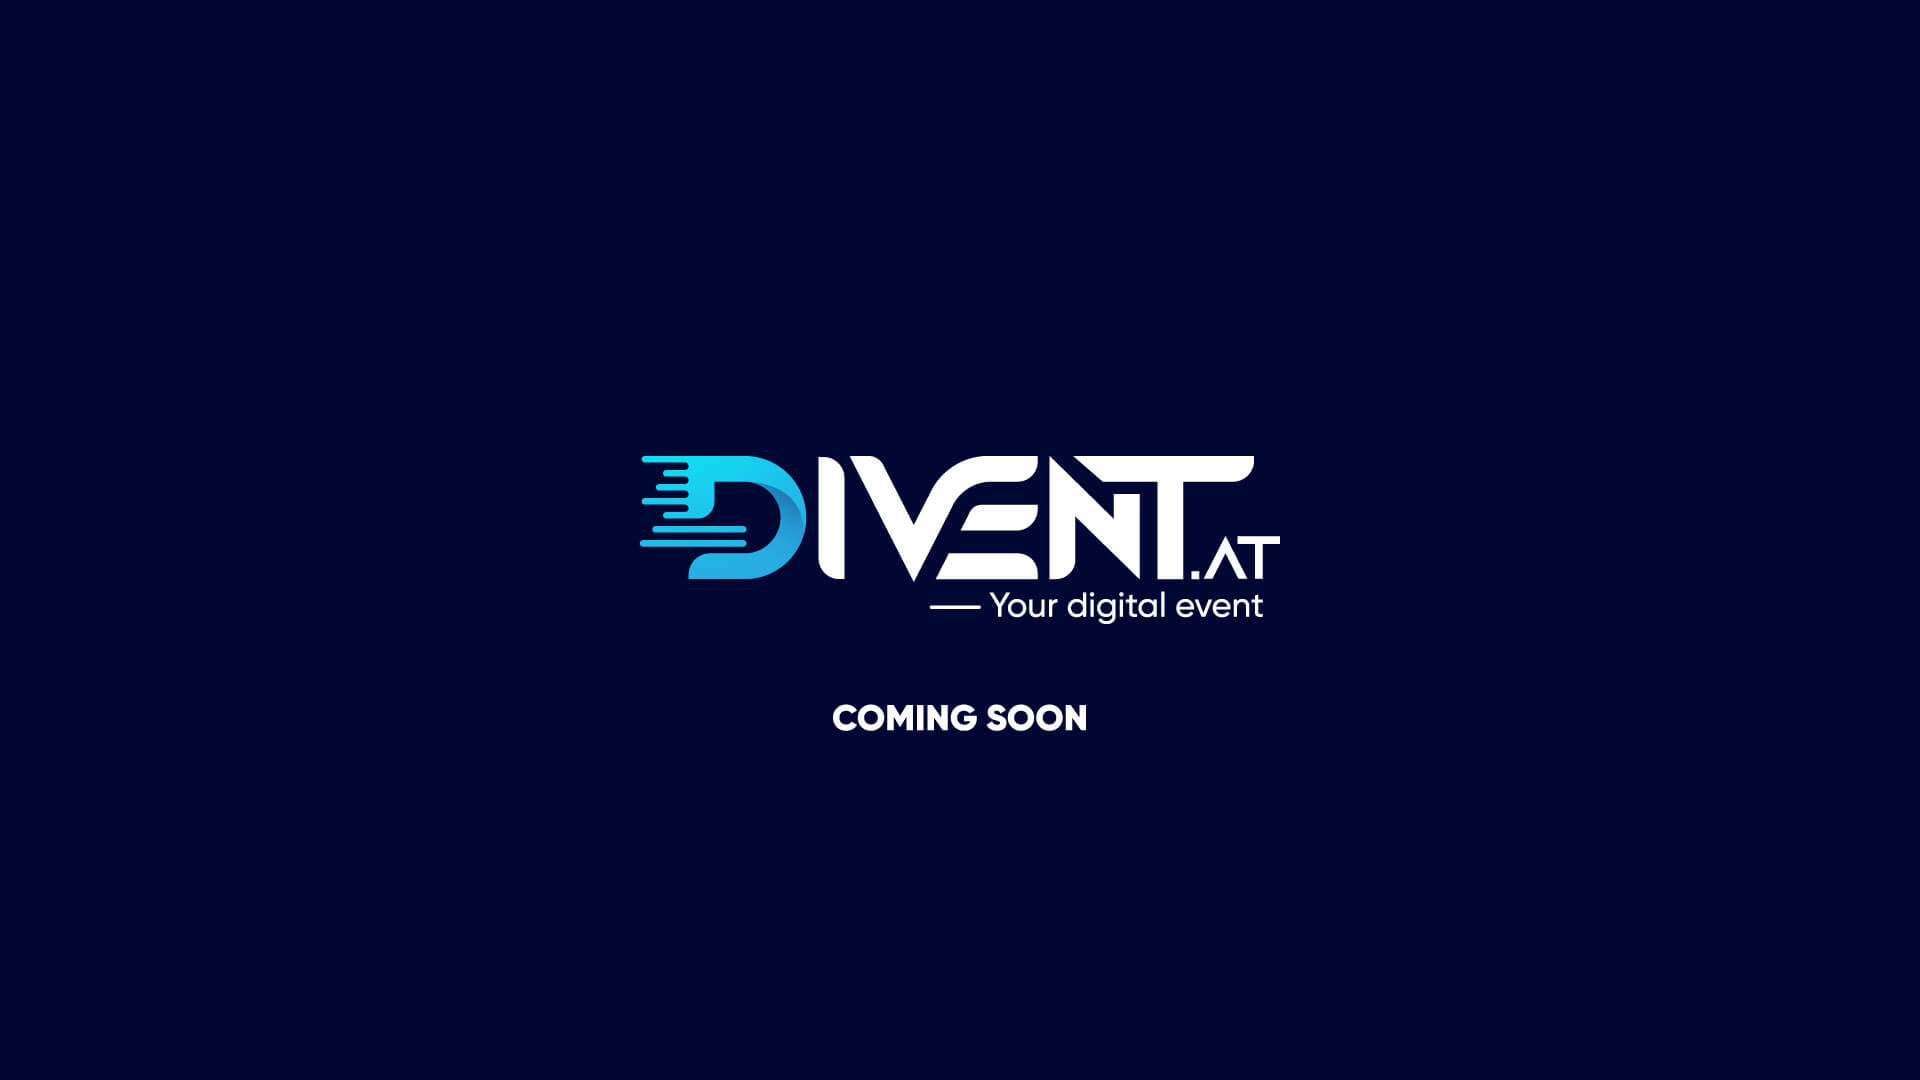 Divent.at: Yout digital event